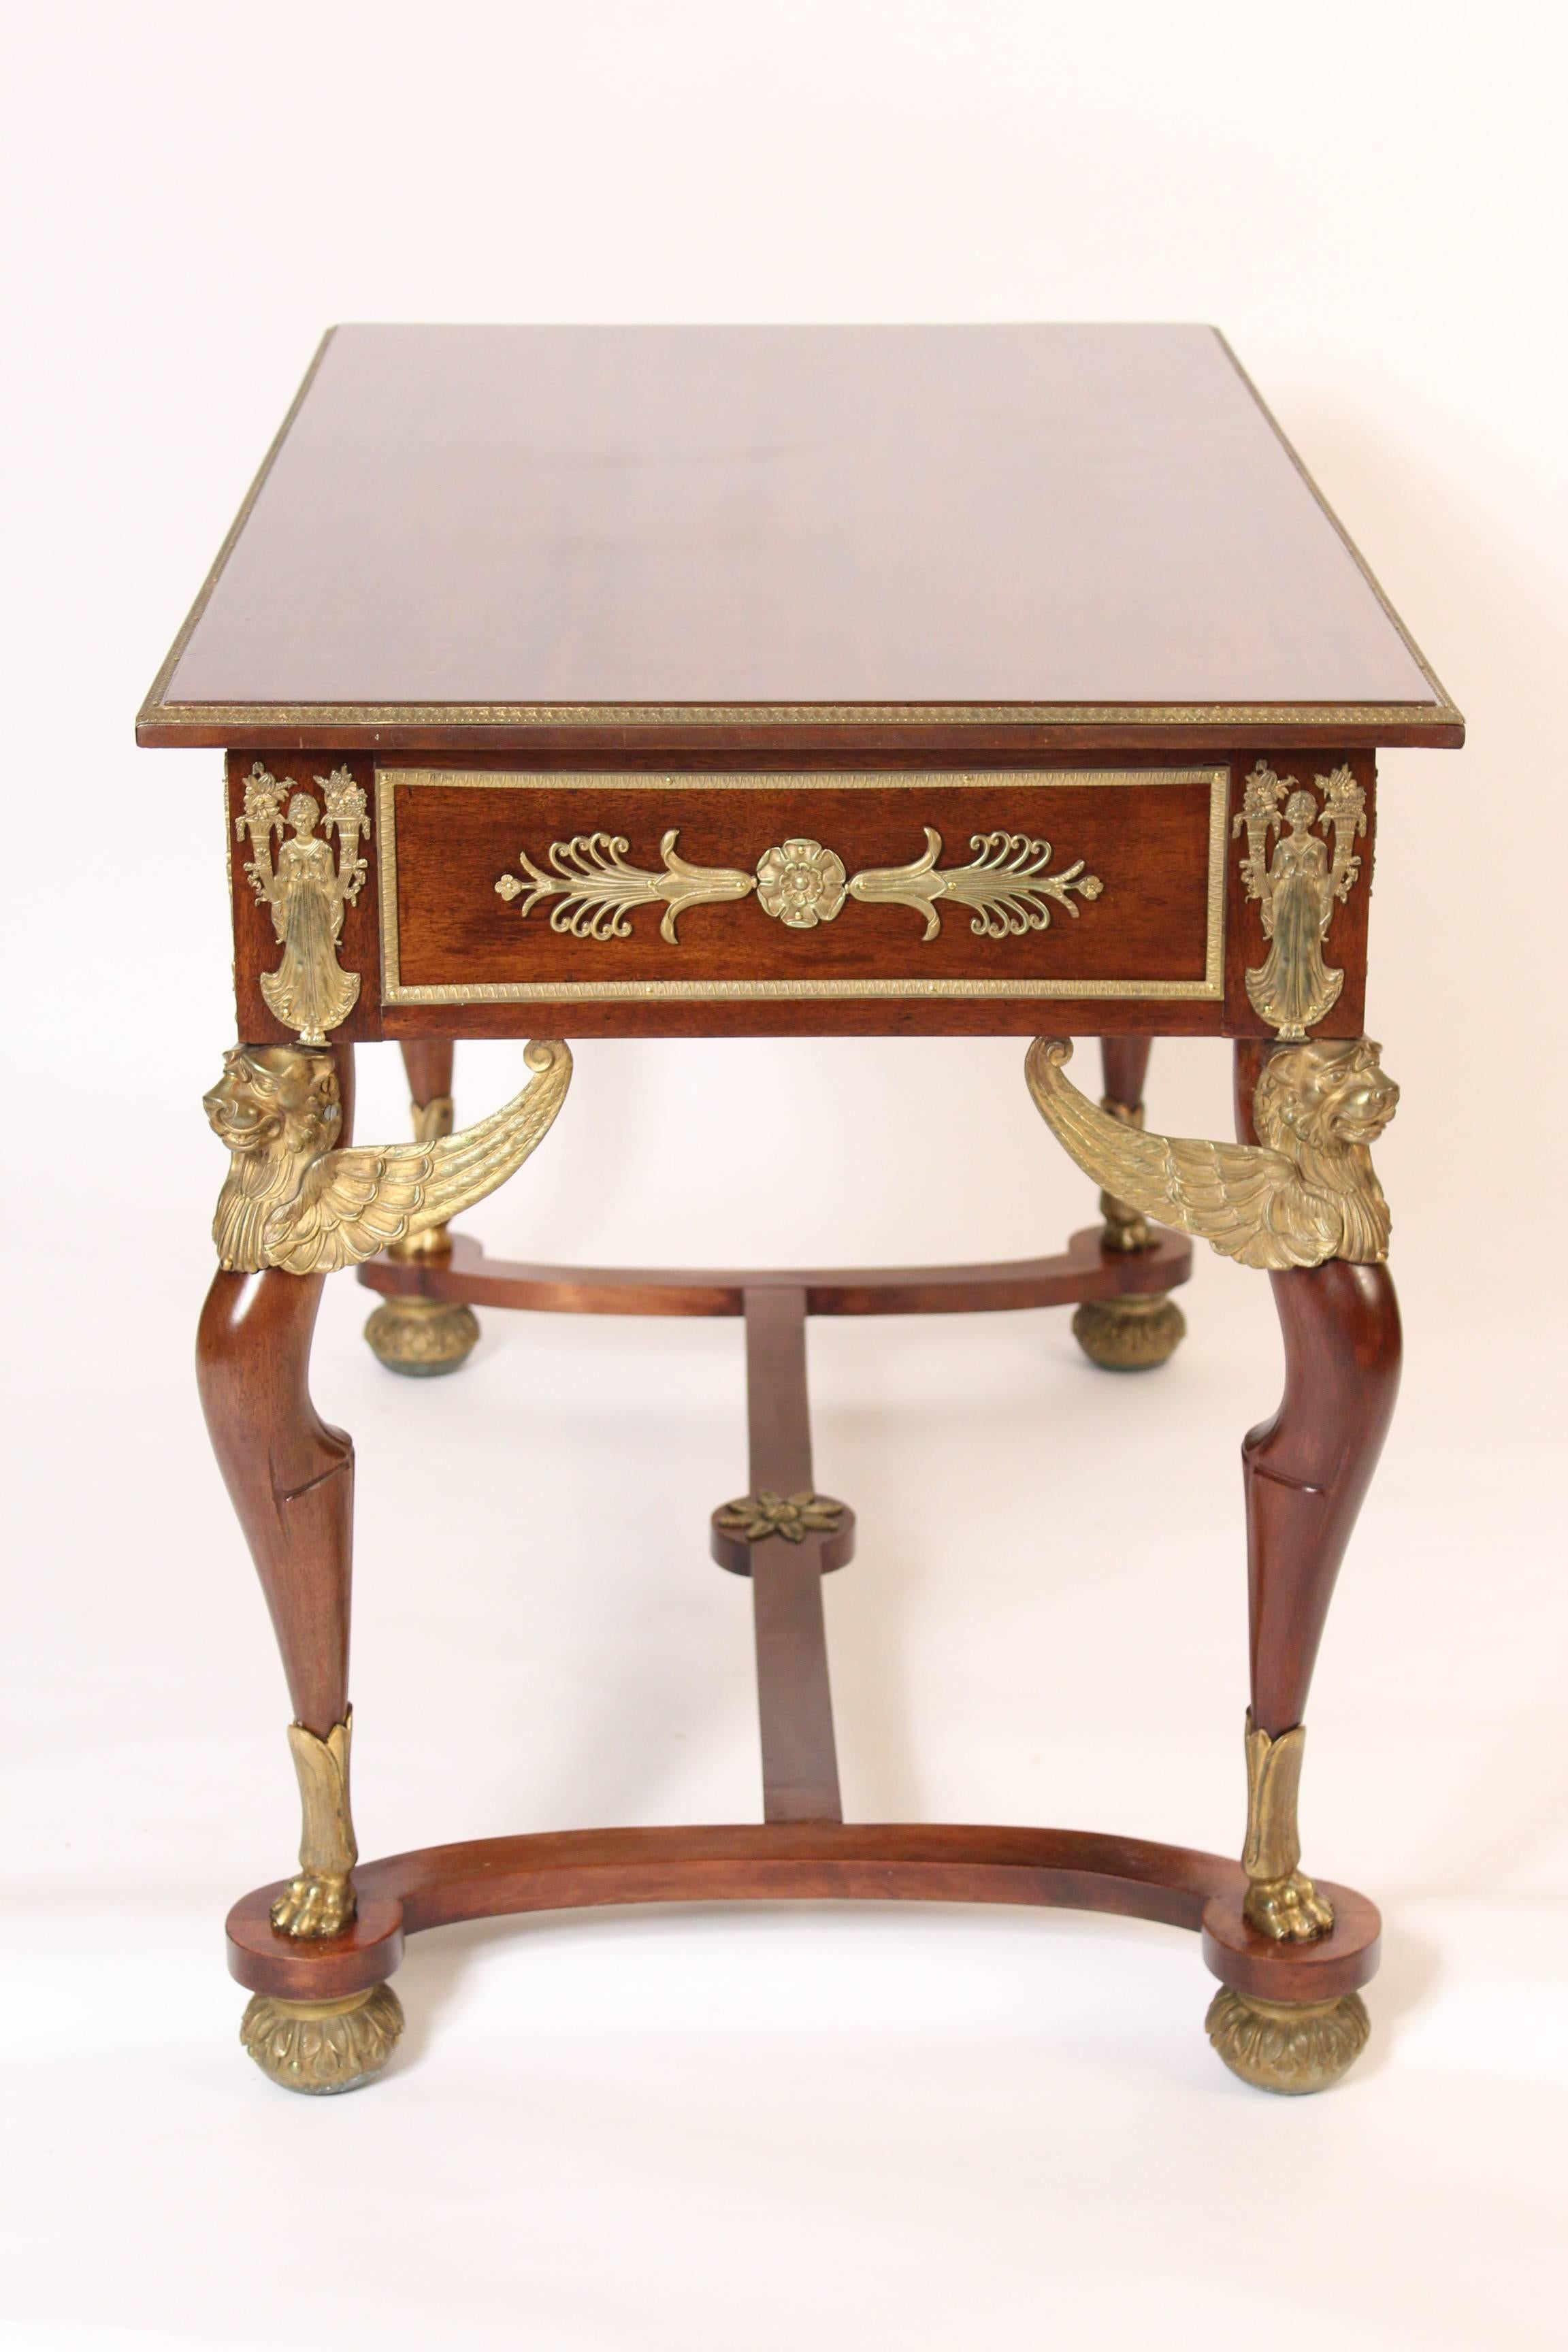 Antique Empire style mahogany desk with gilt bronze mounts, circa 1890-1910. This desk has very fine quality gilt bronze mounts.